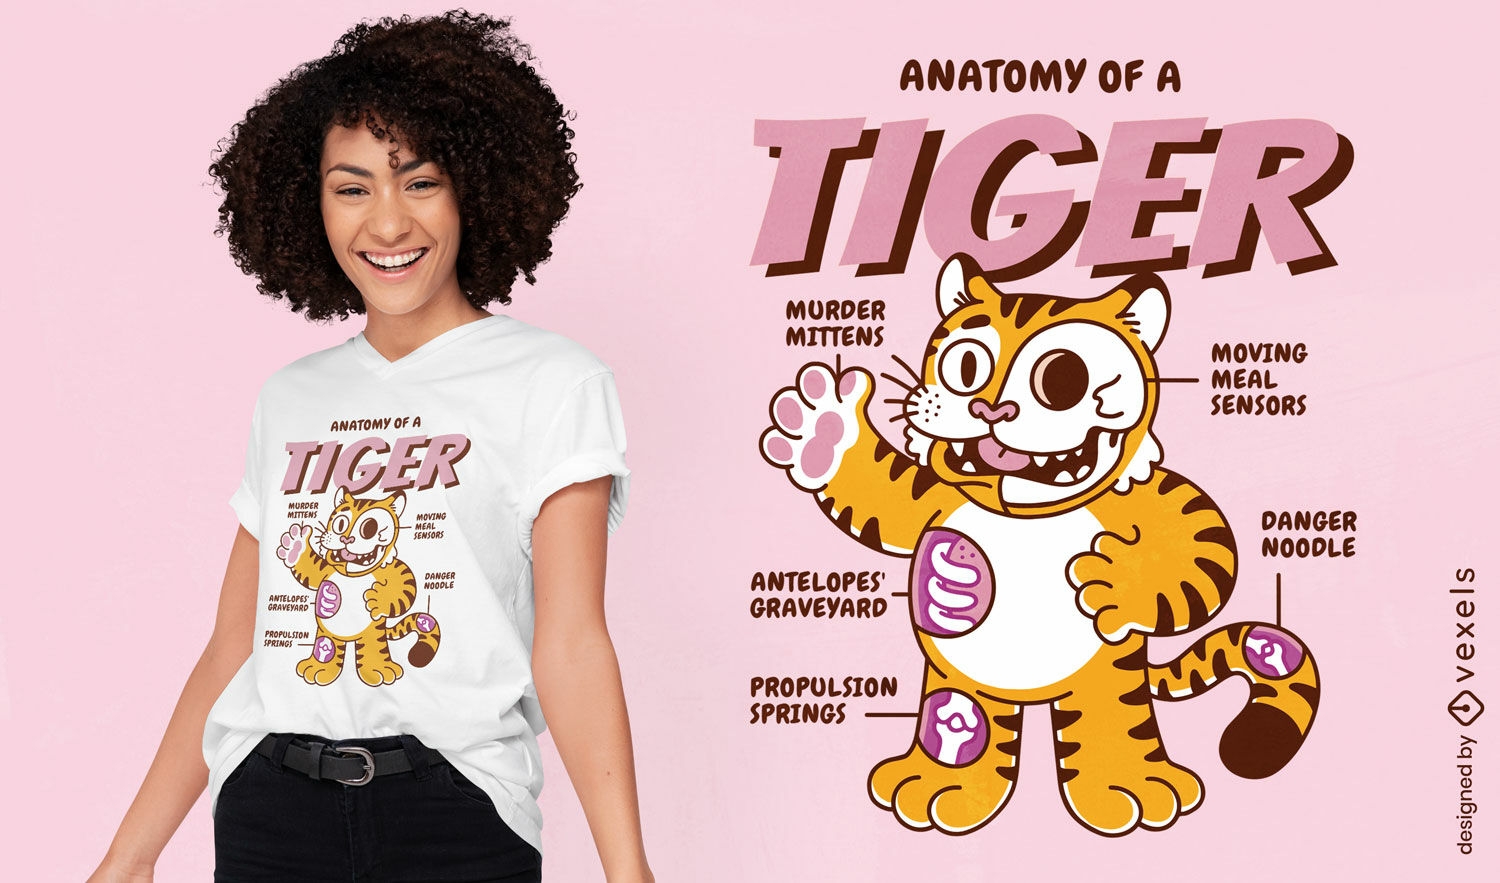 Dise?o de camiseta de anatom?a del tigre.